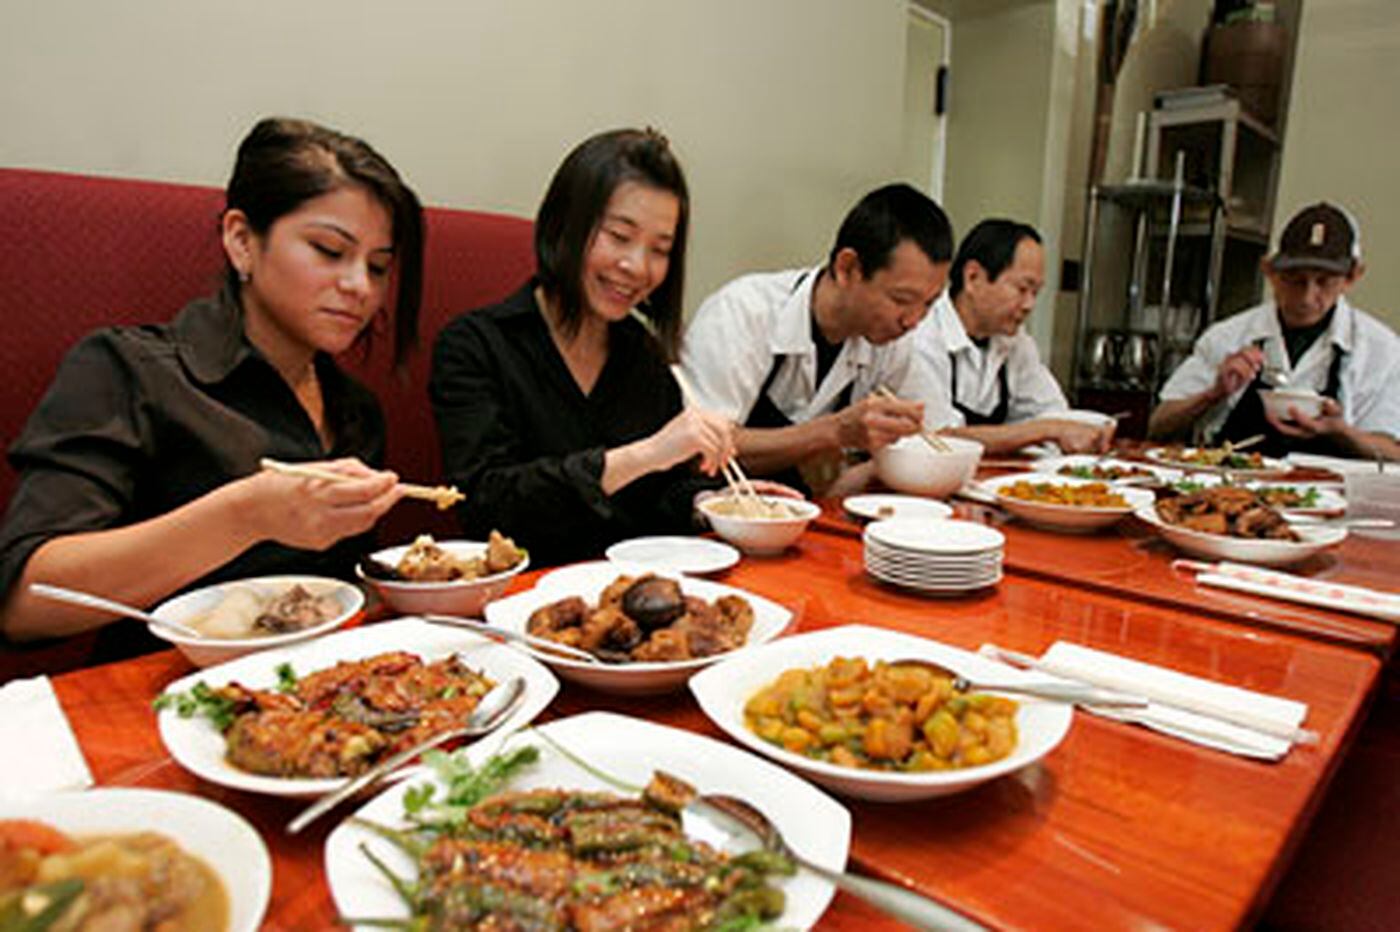 Restaurant "family" meals